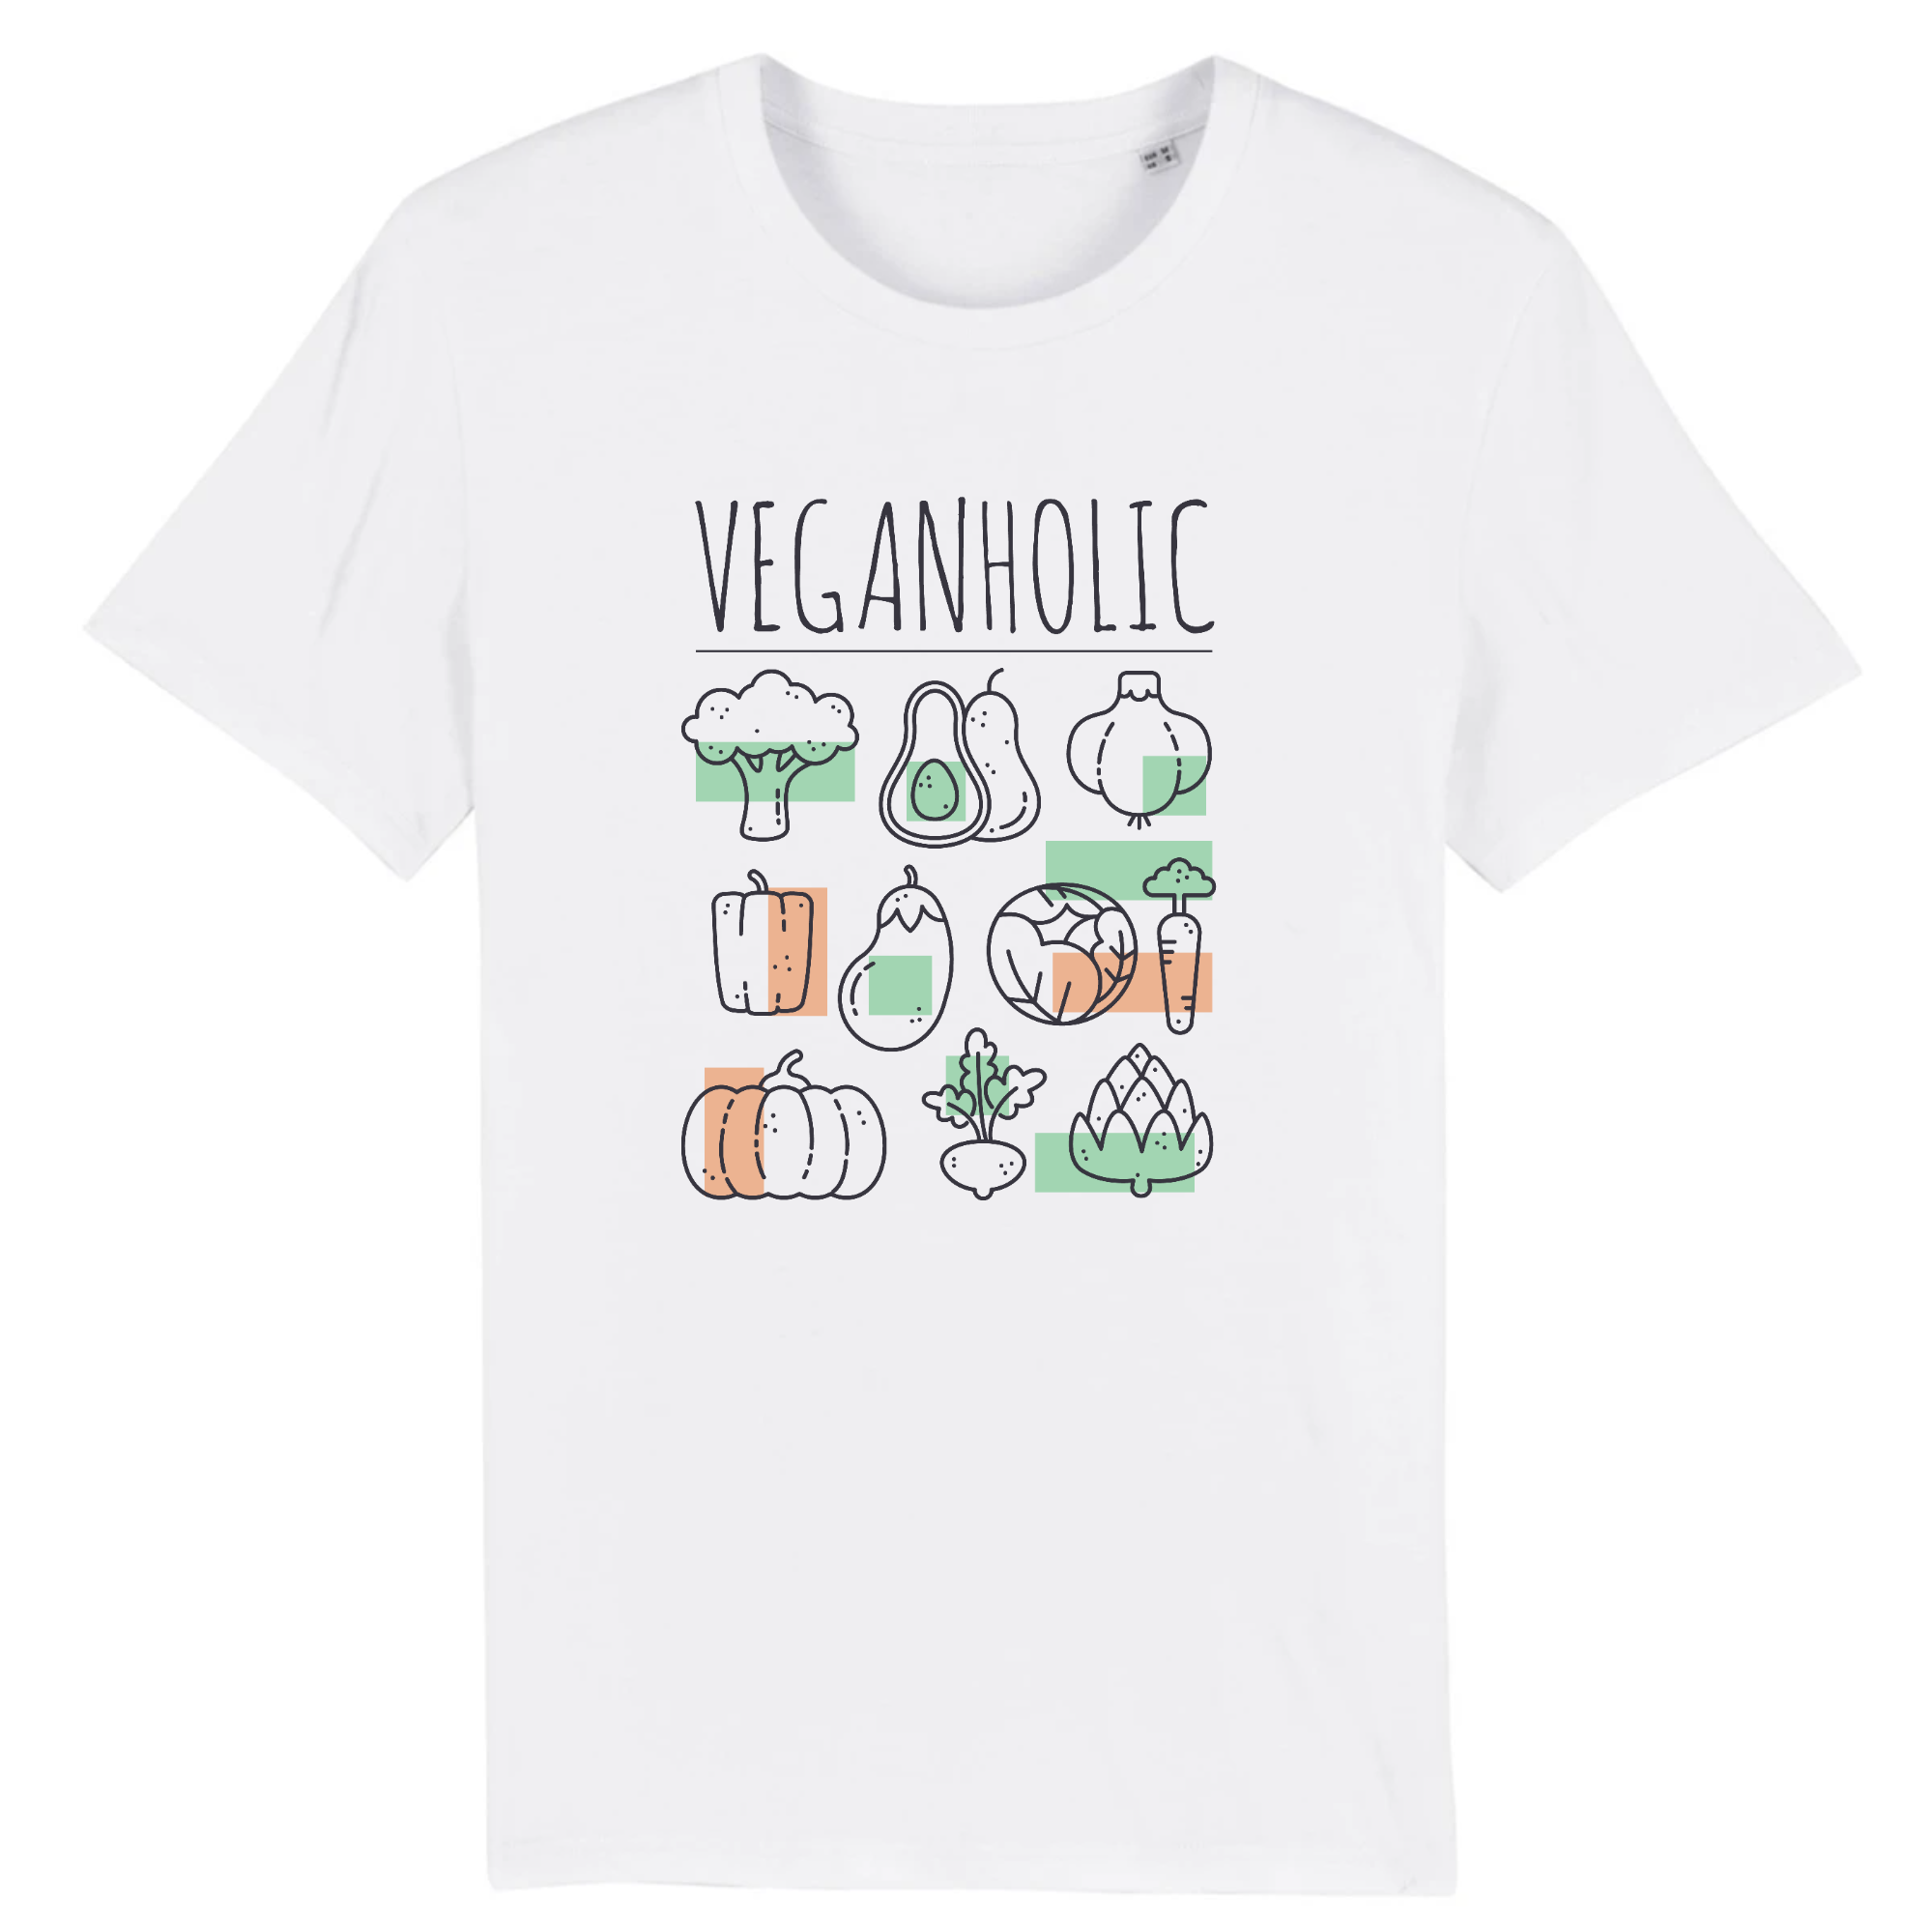 T-shirt bio-veganolic gentlemen